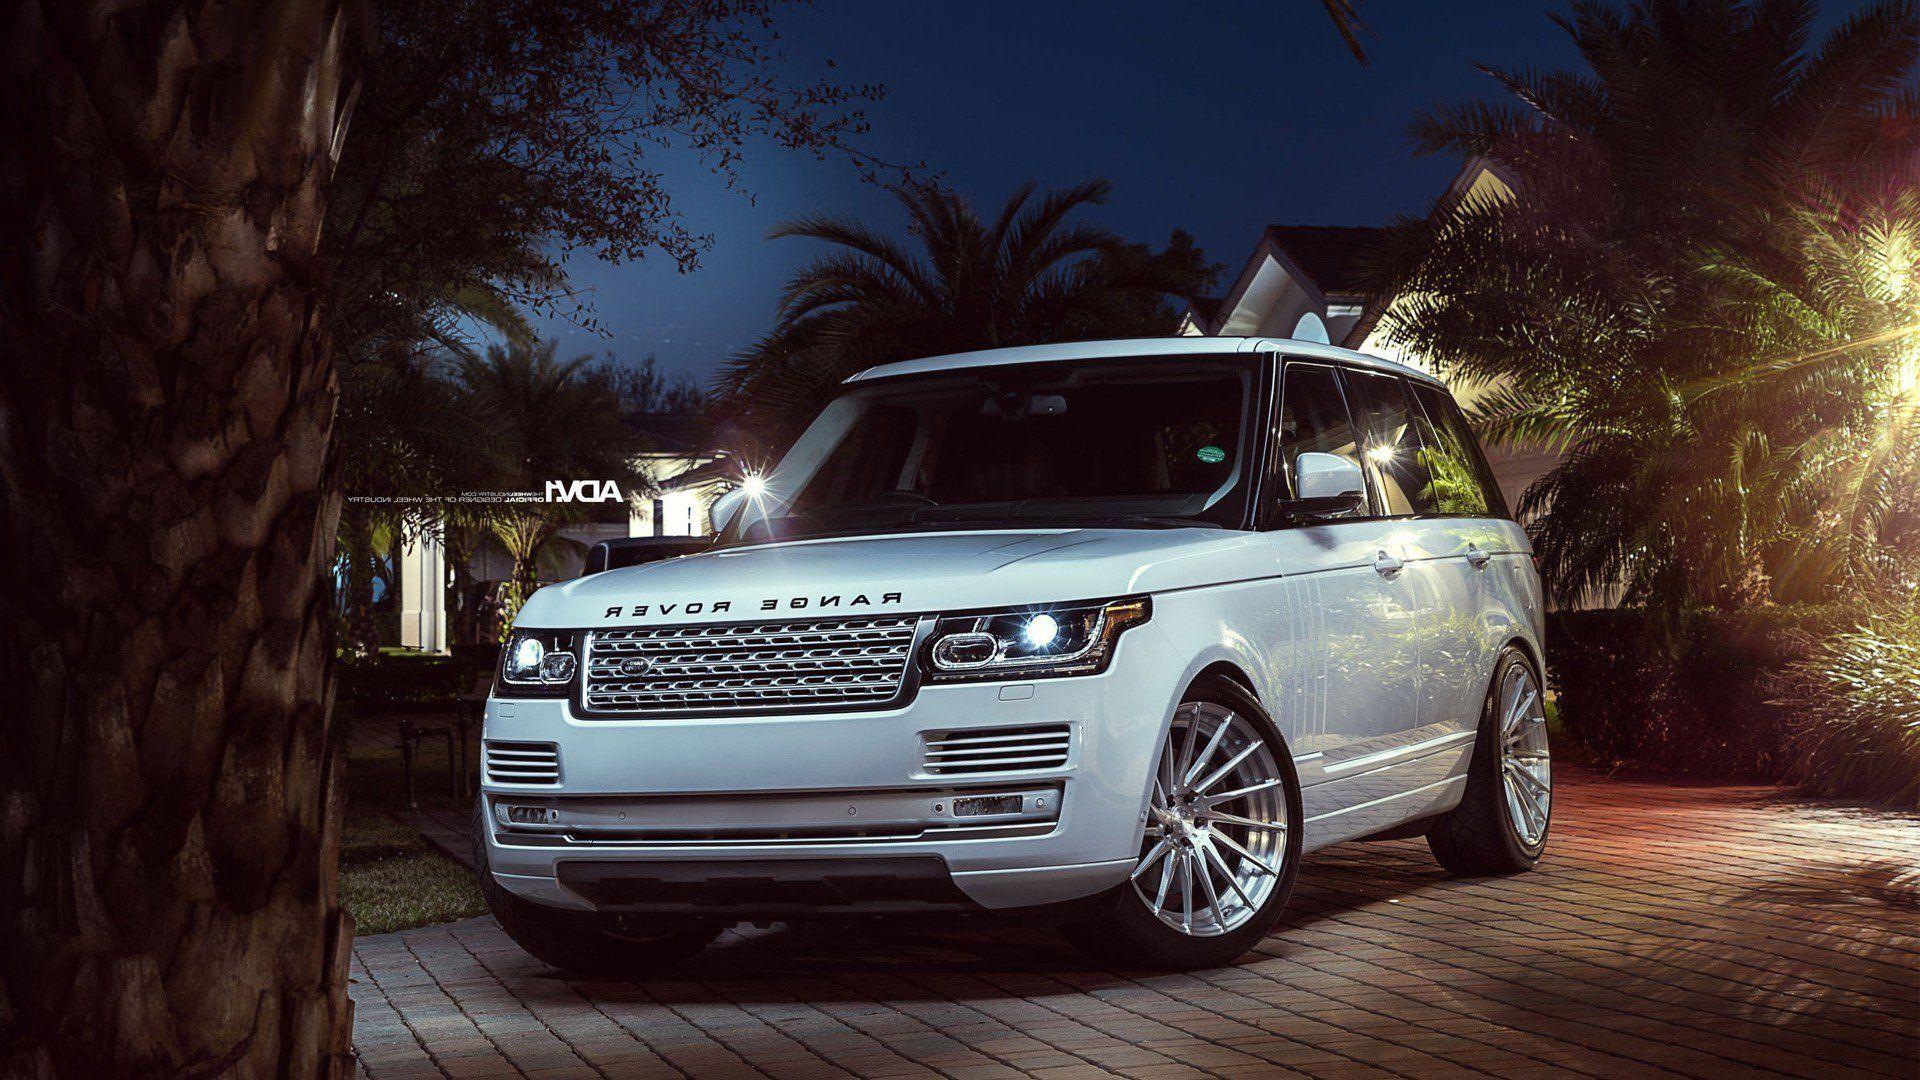 Range Rover, HD Cars, 4k Wallpaper, Image, Background, Photo